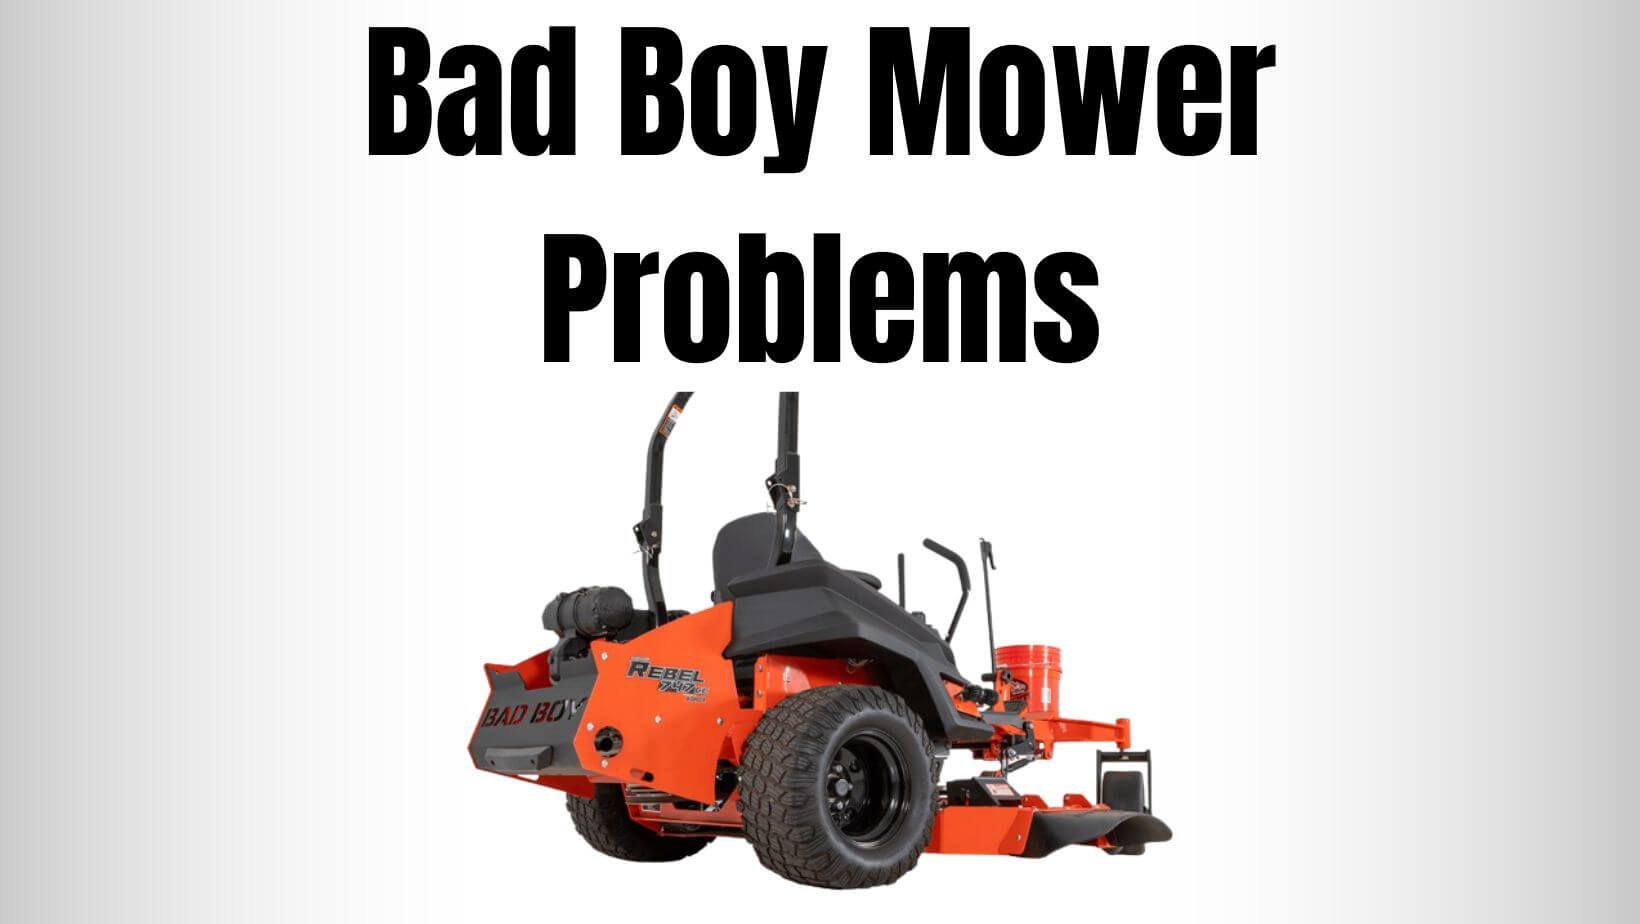 Bad Boy Mower Problems